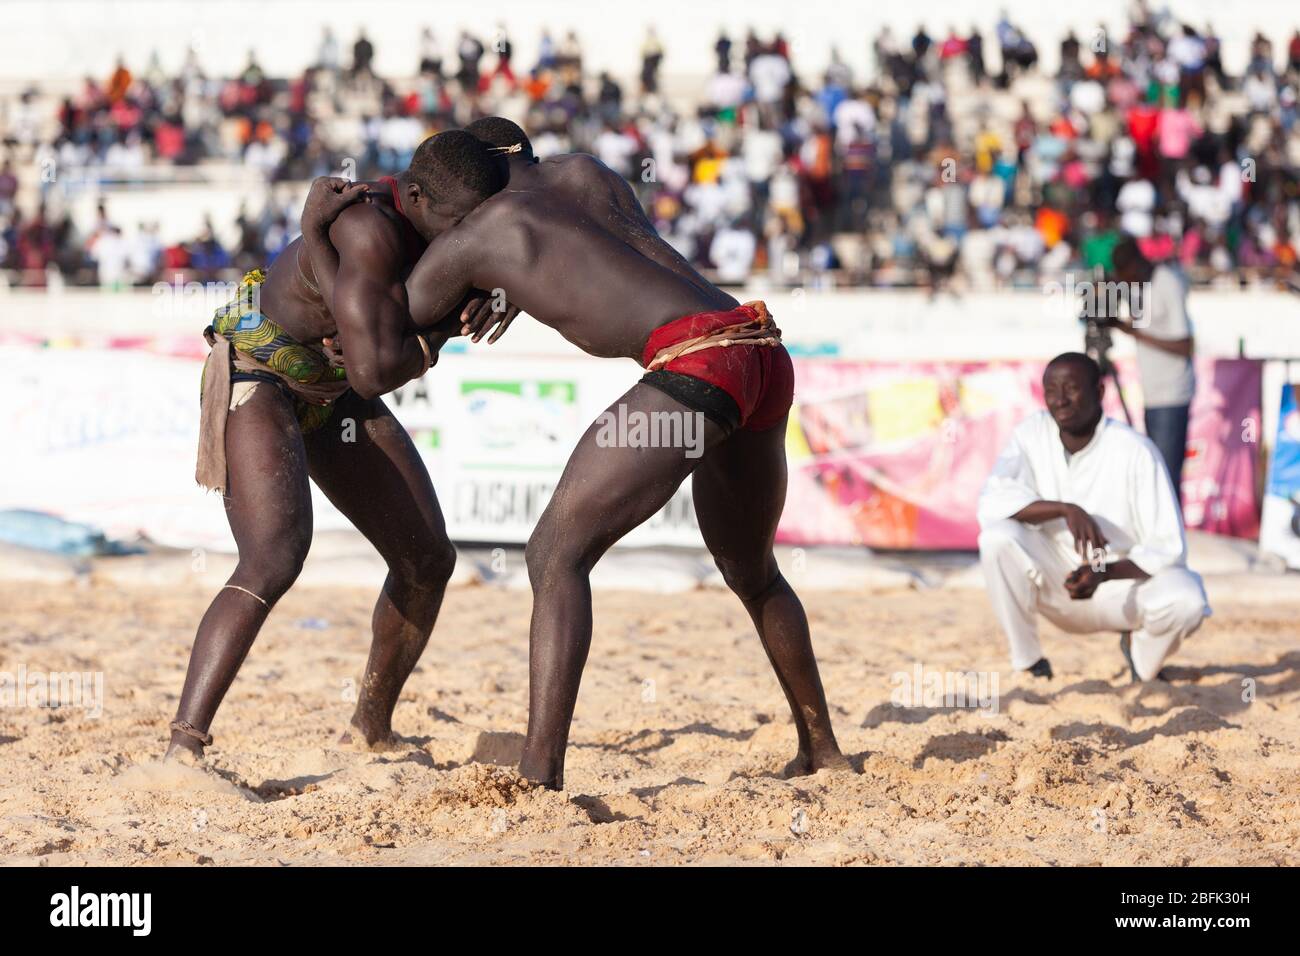 A moment of deadlock during a wrestling match in Dakar, Senegal. Stock Photo